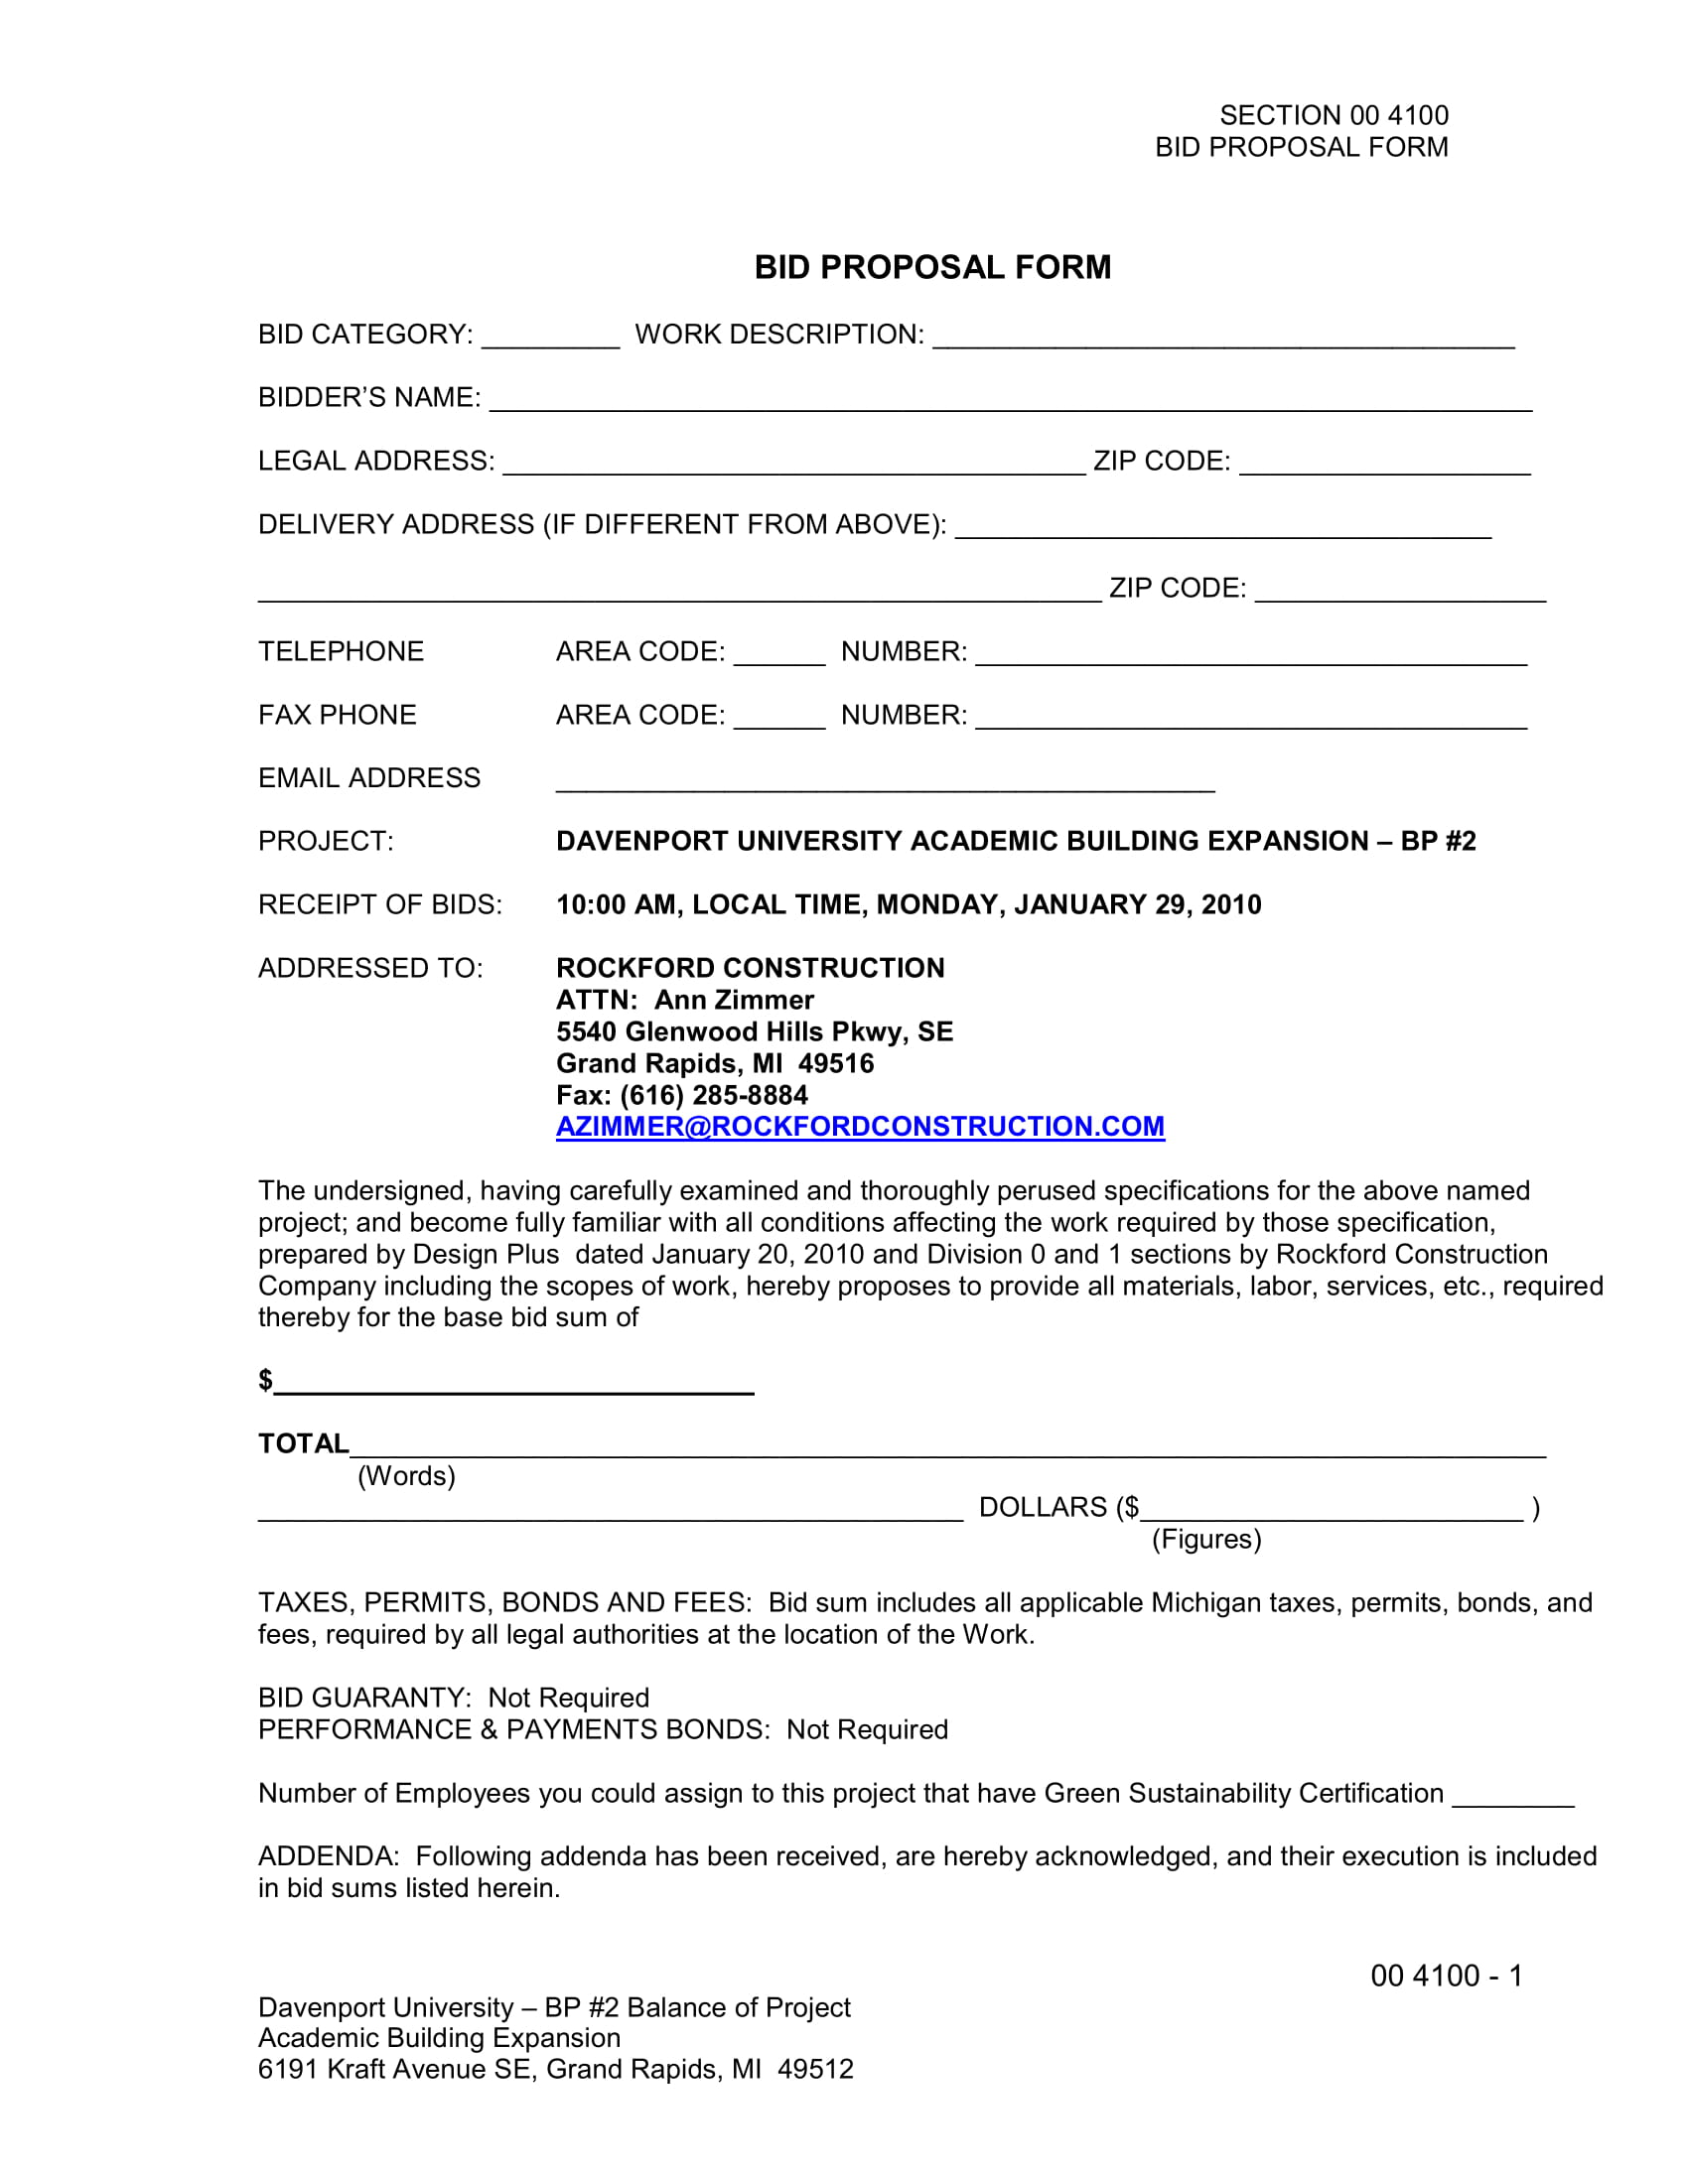 bid proposal form